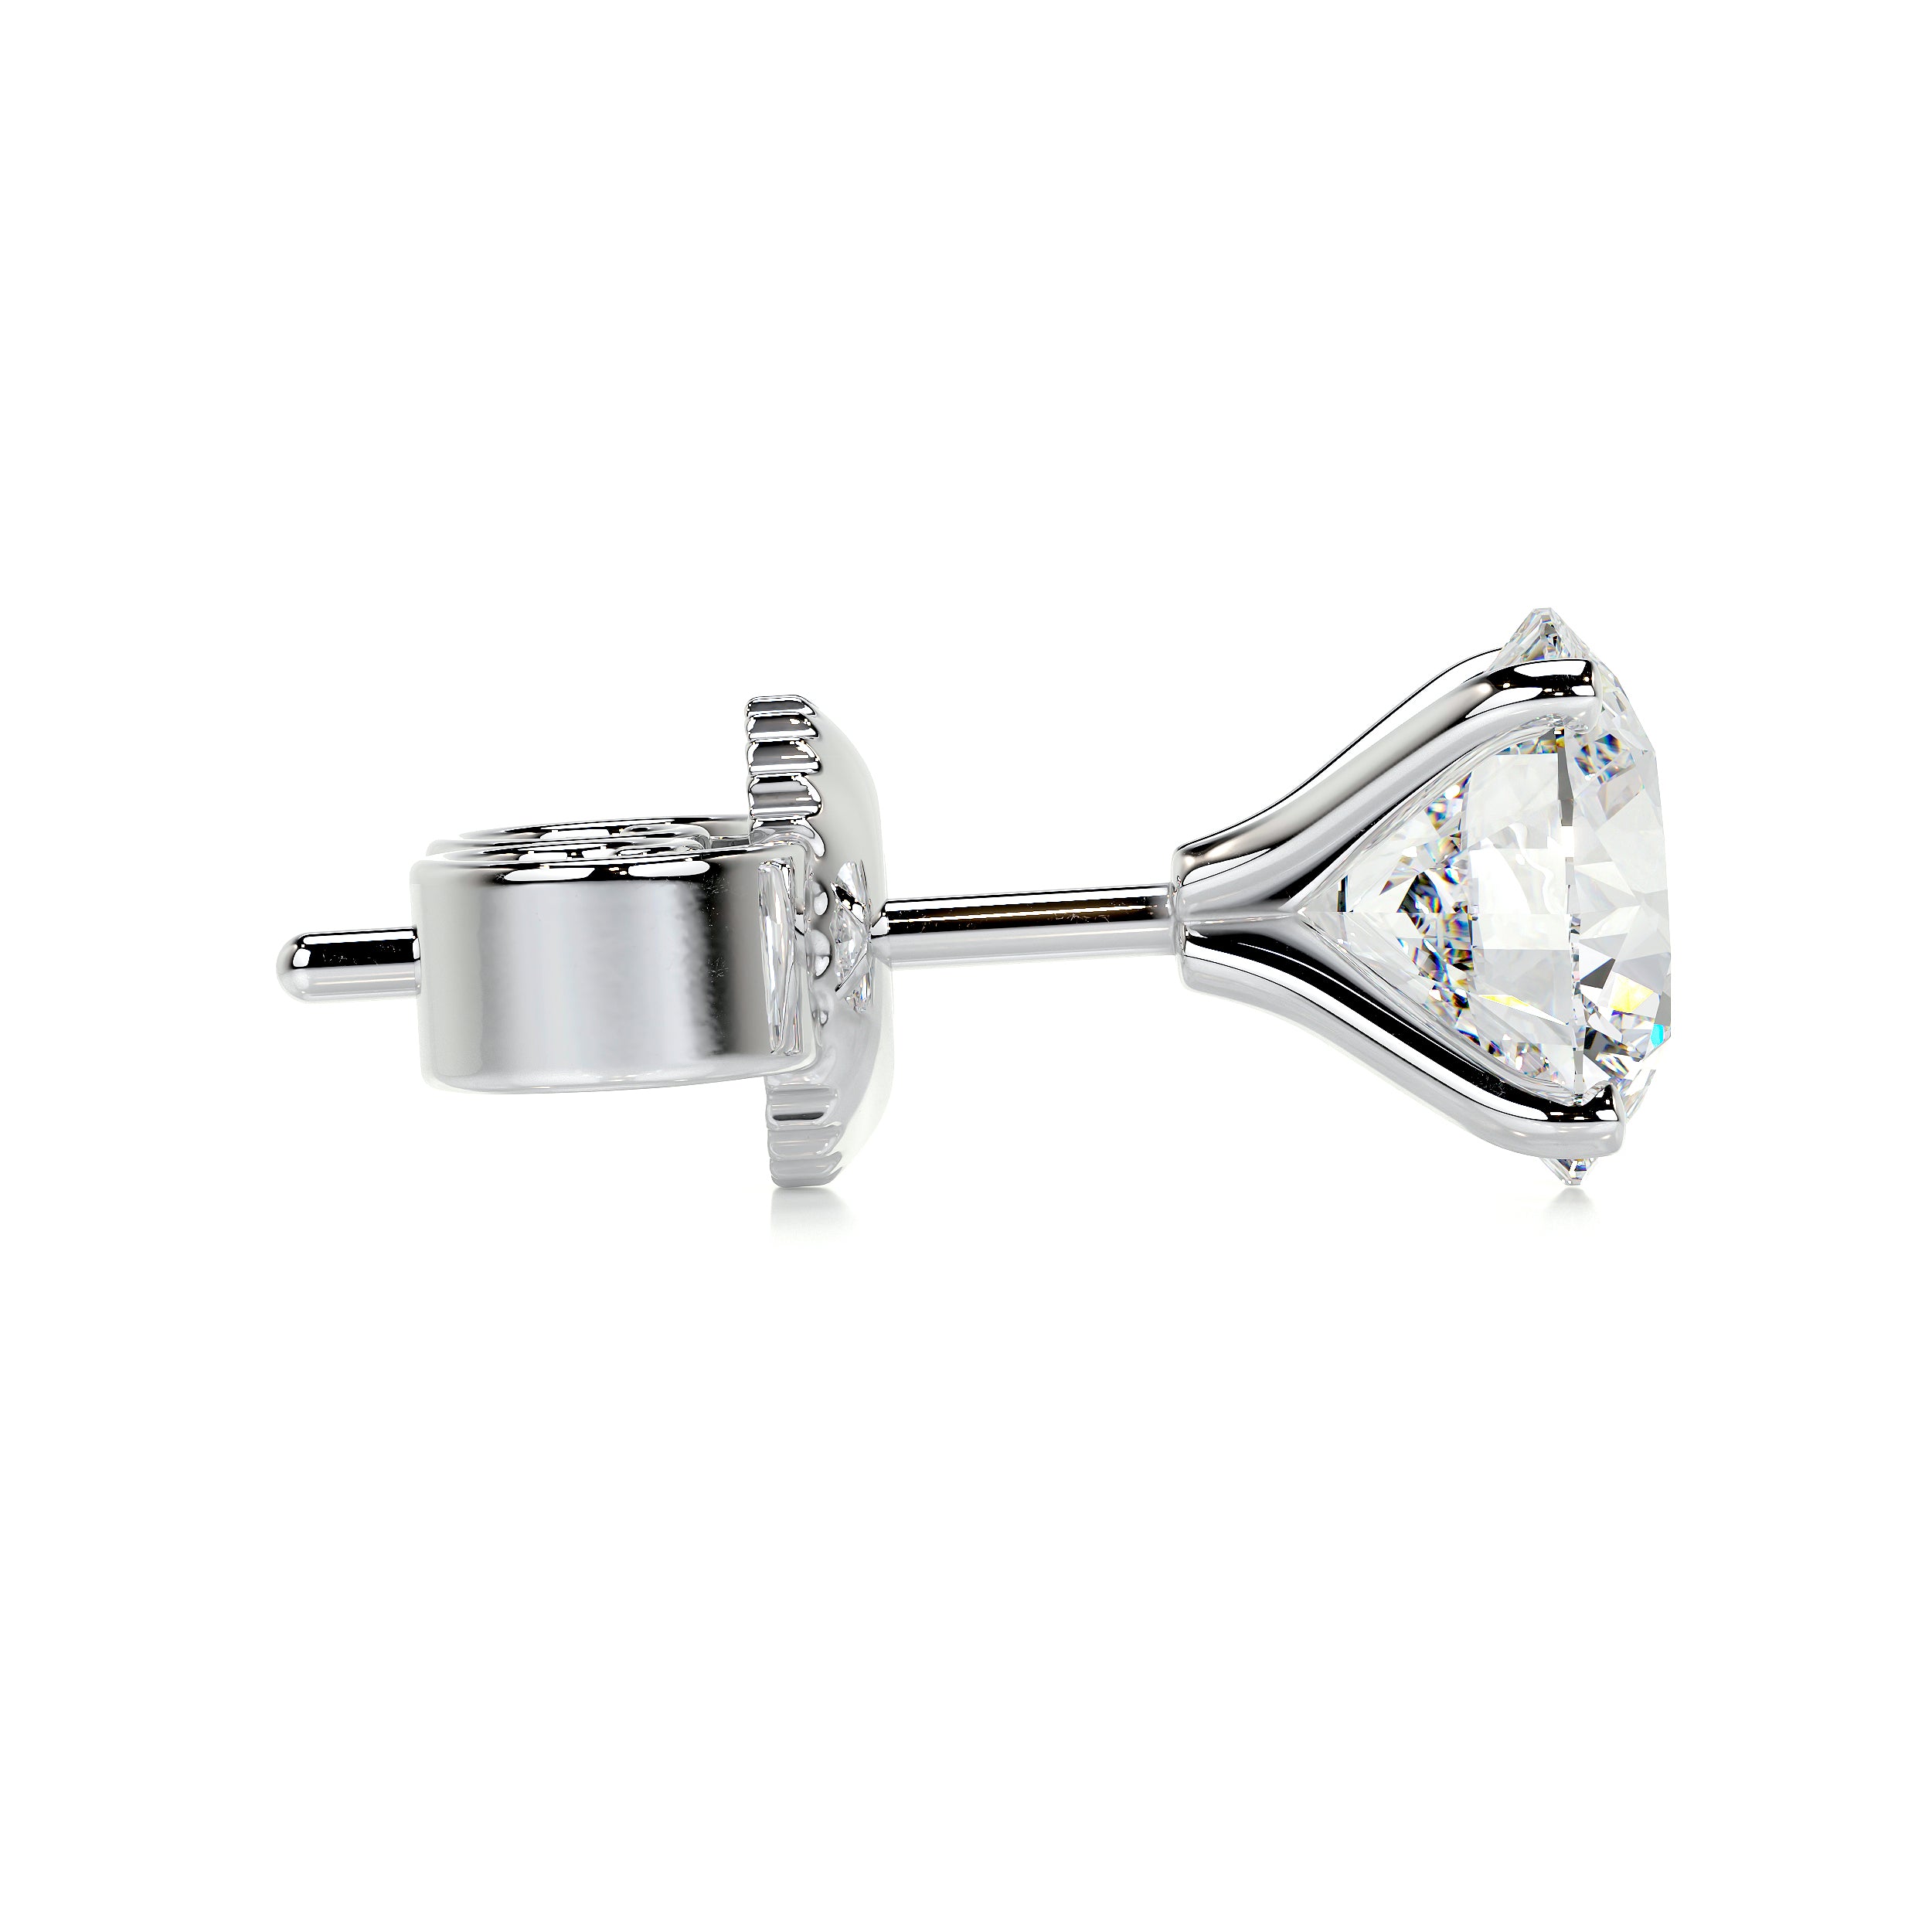 Allen Lab Grown Diamond Earrings   (6 Carat) -18K White Gold